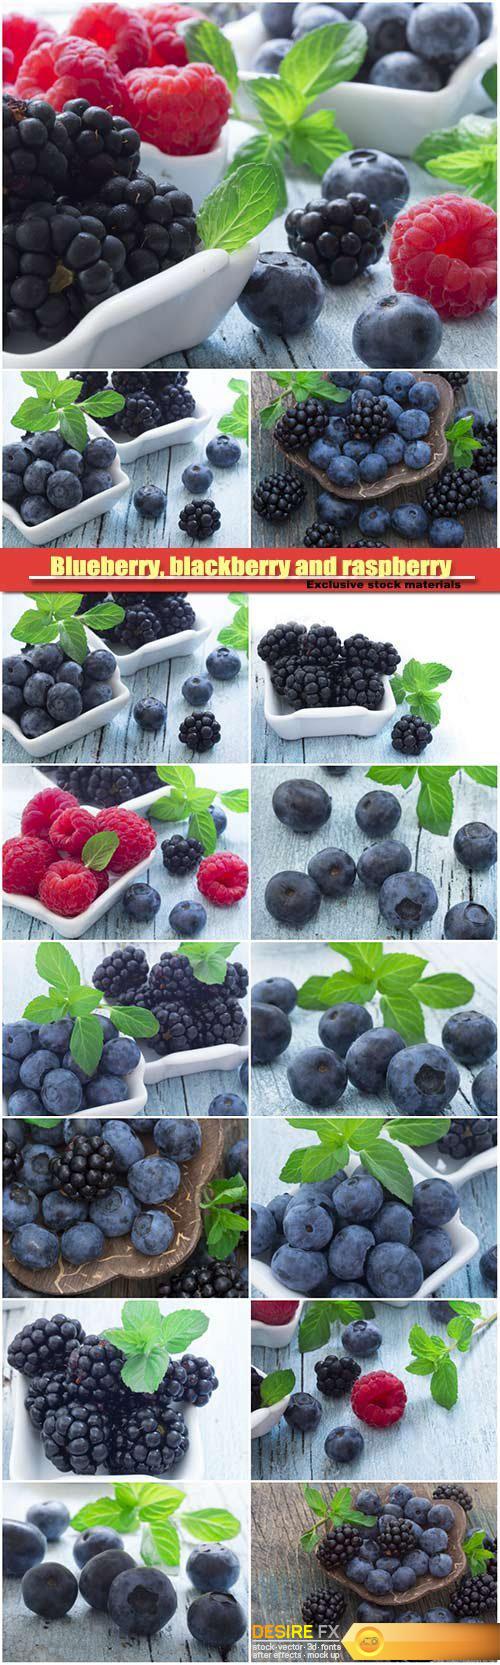 Blueberry, blackberry and raspberry